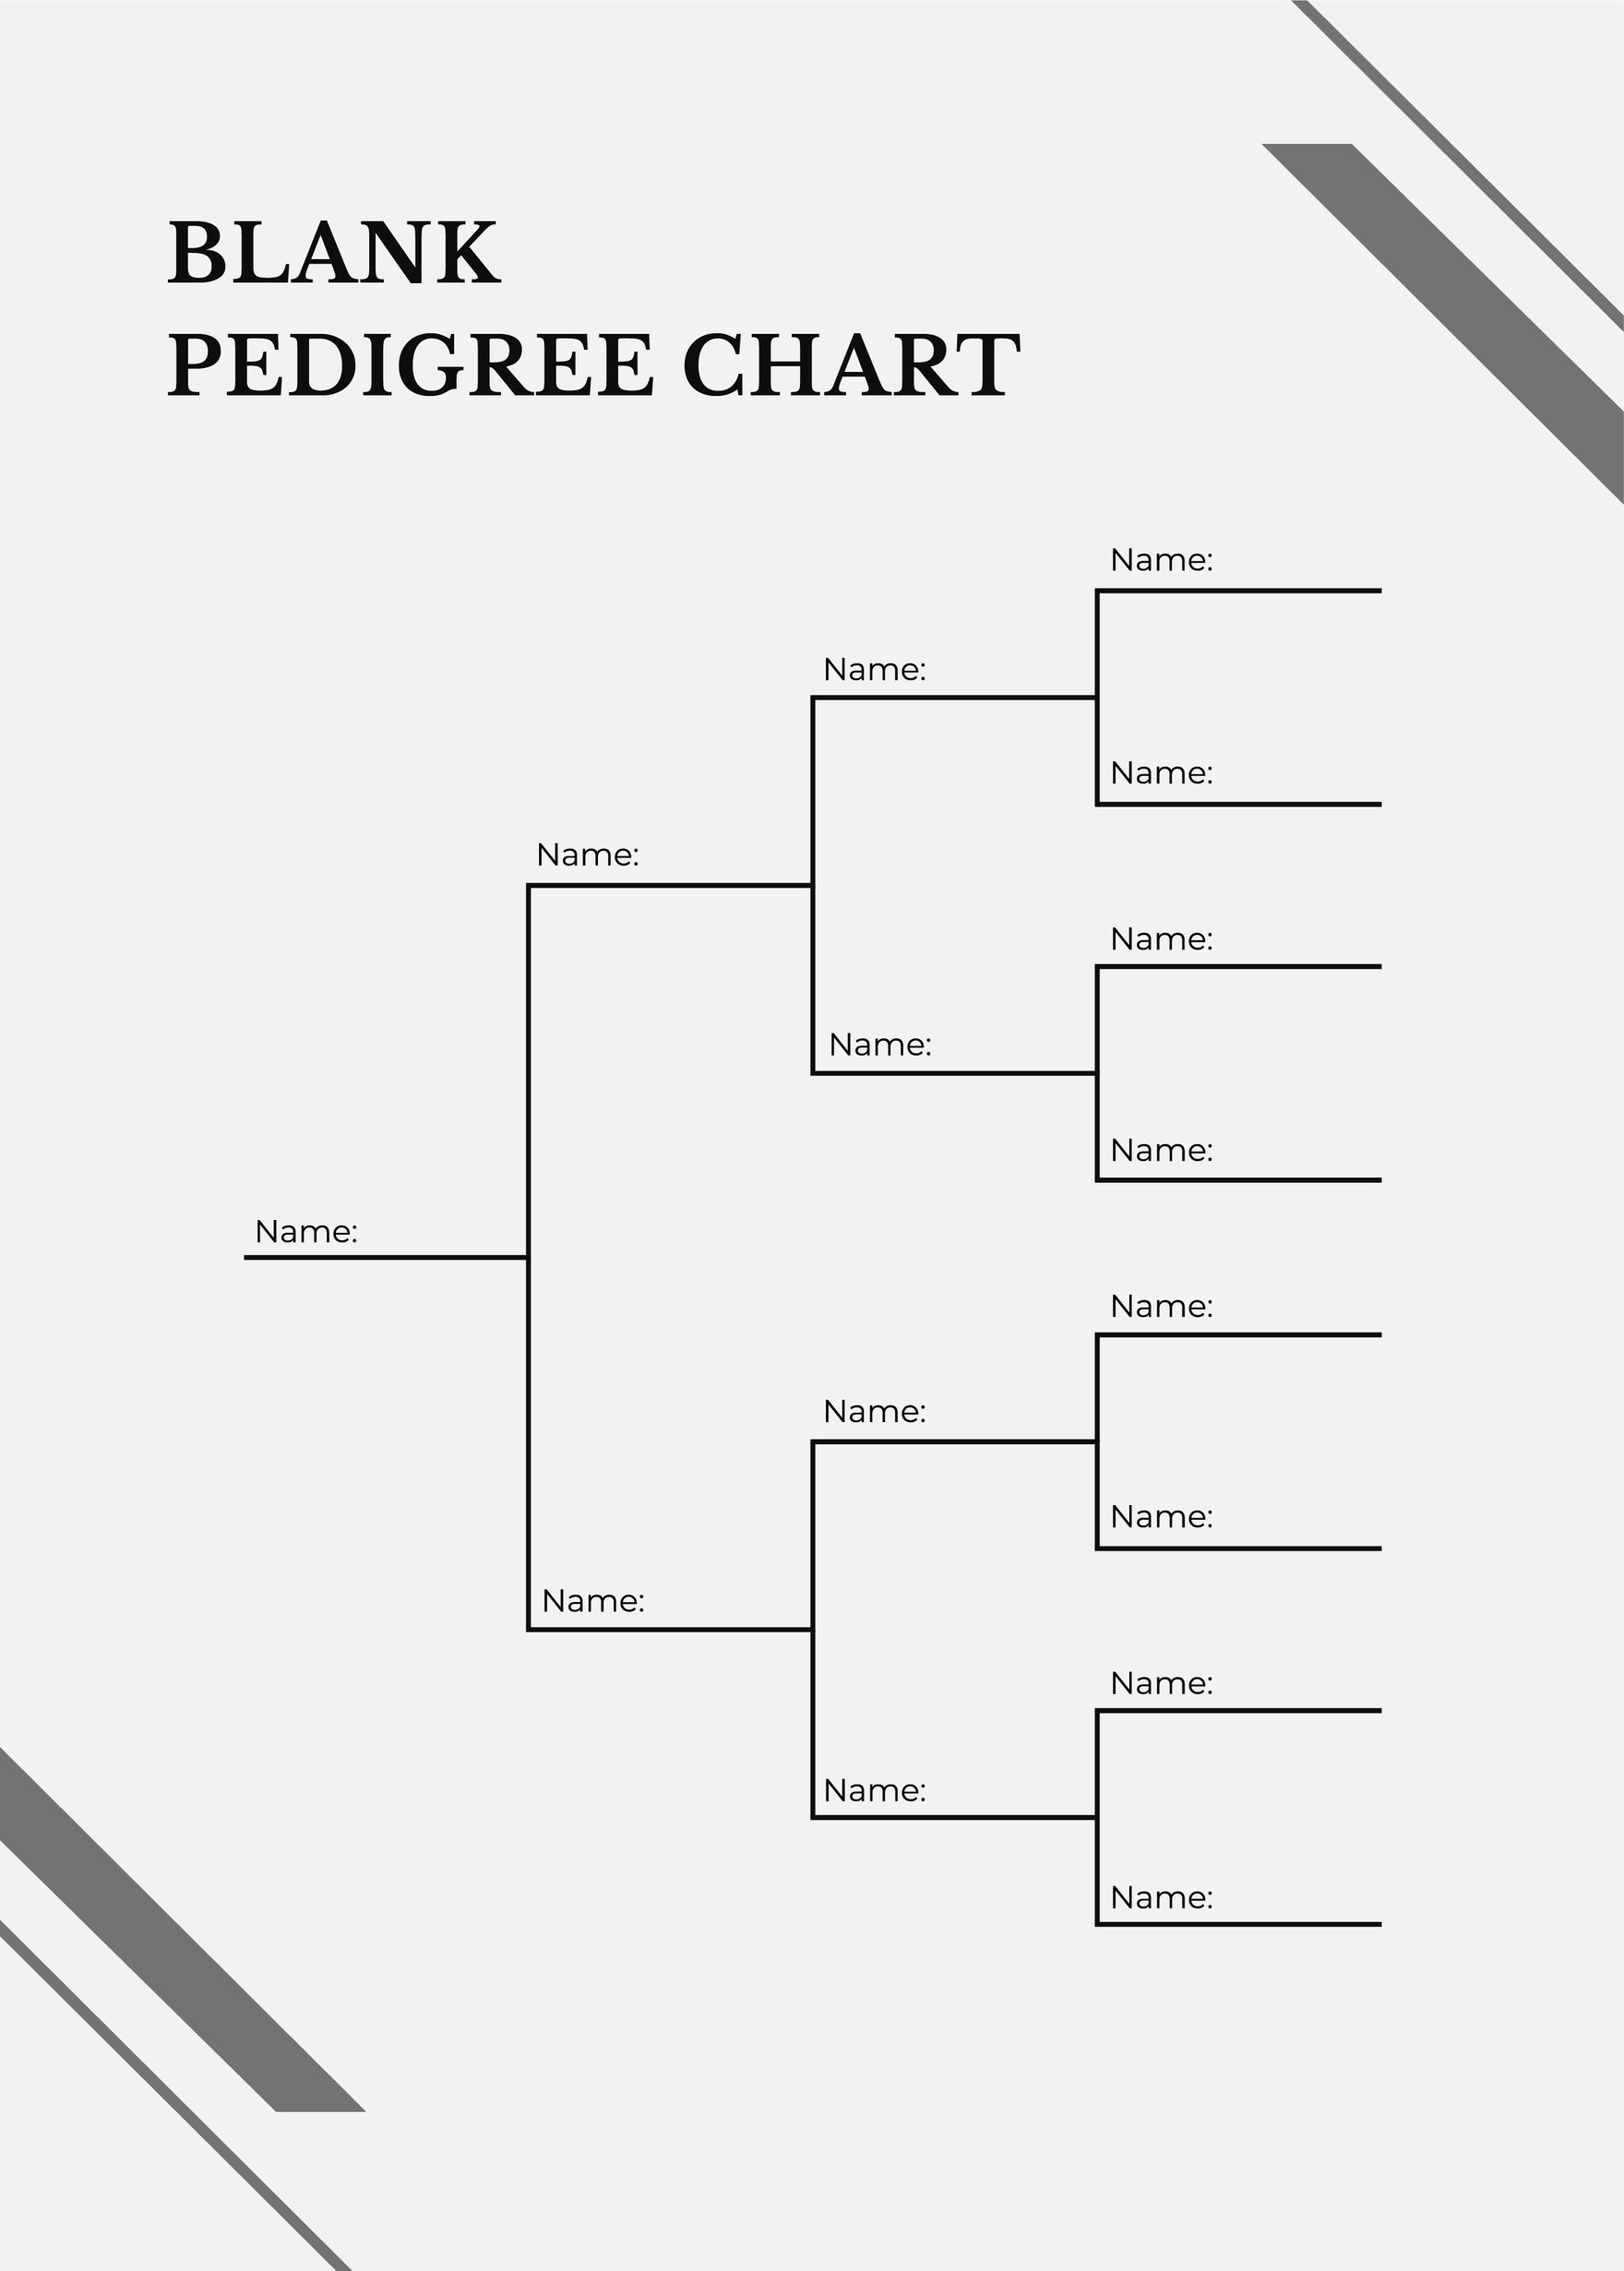 free-blank-pedigree-chart-download-in-pdf-illustrator-template